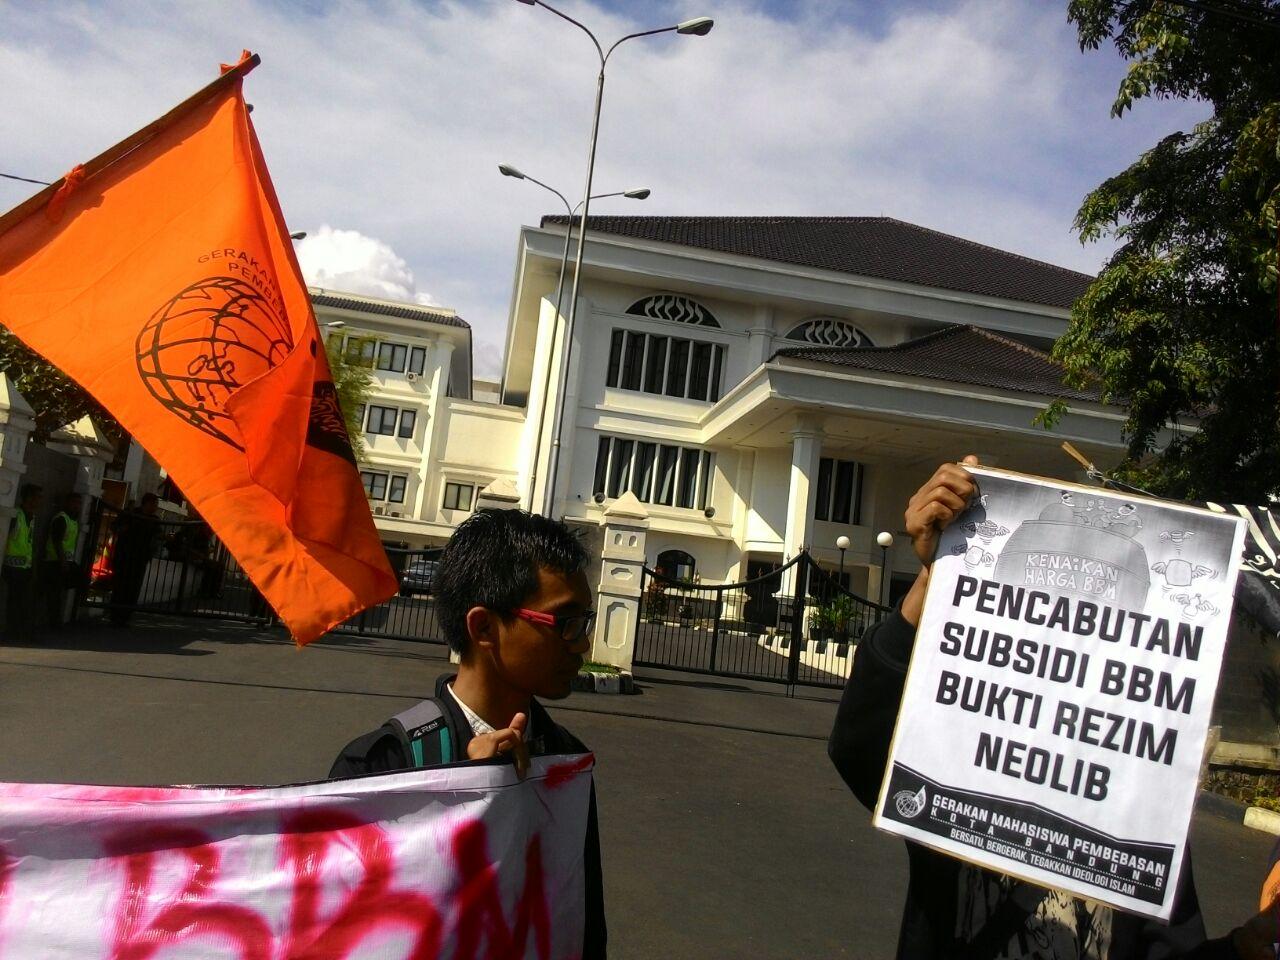 Pencabutan Subsidi: Skenario Busuk Rezim Neolib Jokowi-JK Menuju Penyempurnaan Liberalisasi Migas  